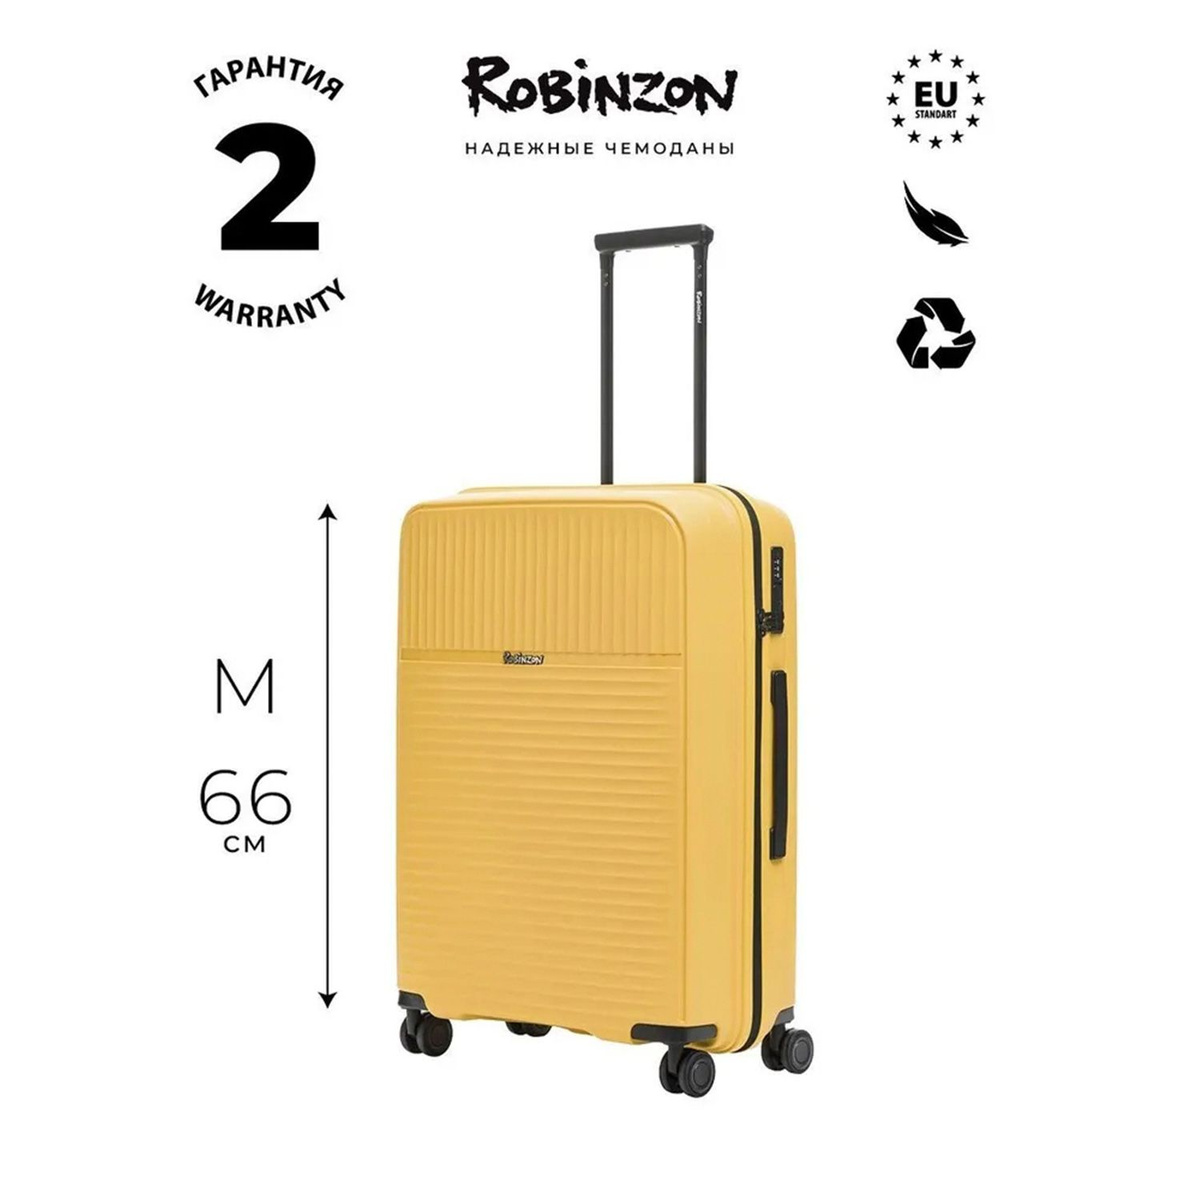 Габариты чемодана: 46x66x26 см Вес чемодана: 3,1 кг Объём чемодана: 70 л